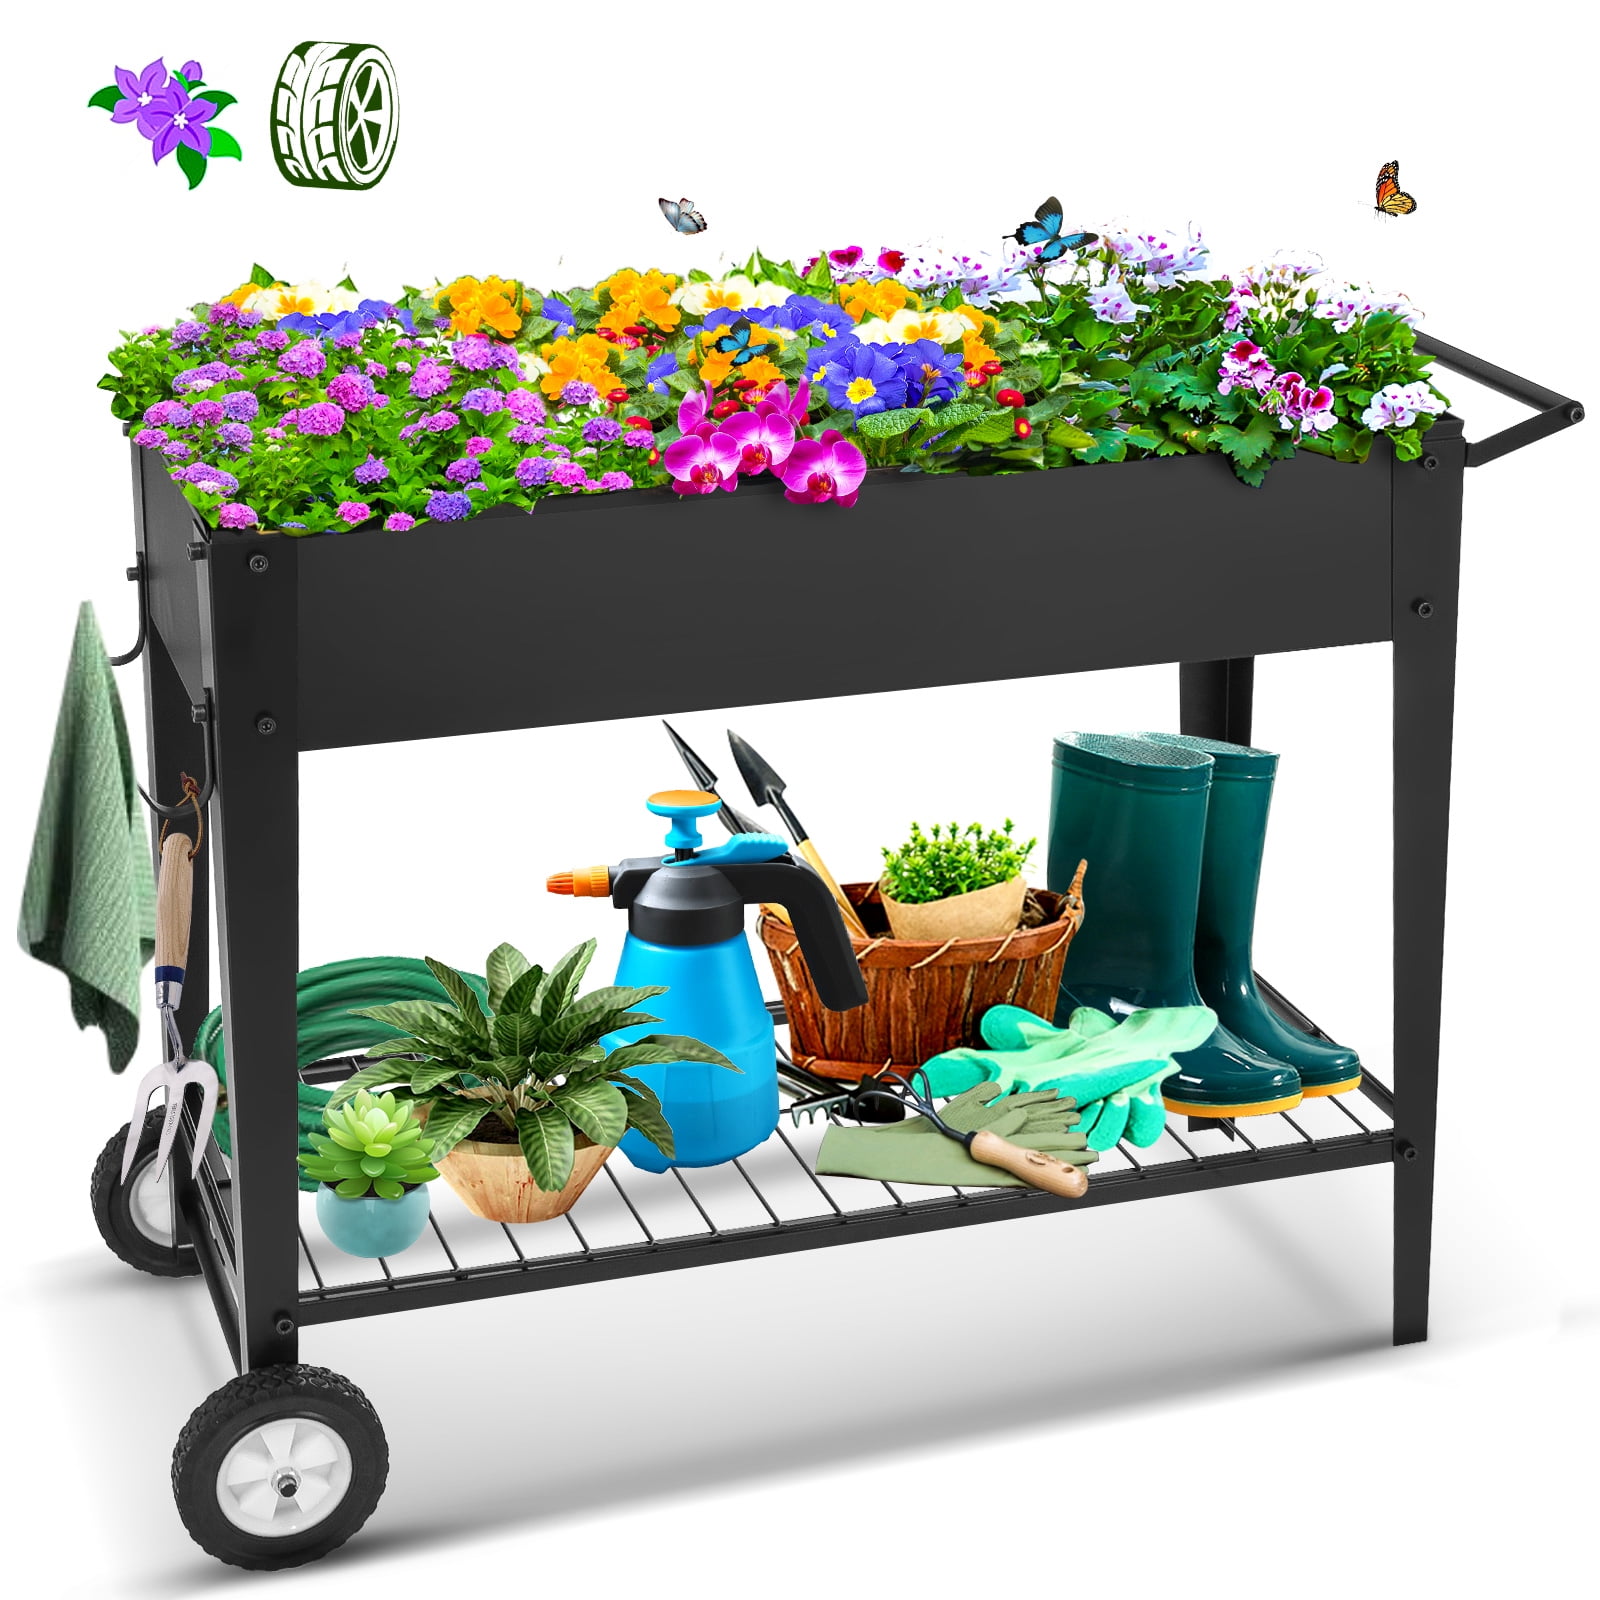 Removable Shelves Kinsuite Garden Bed Raised Planter Flower Box with 12 Grids for Vegetable Tomato Herbs Gardening 